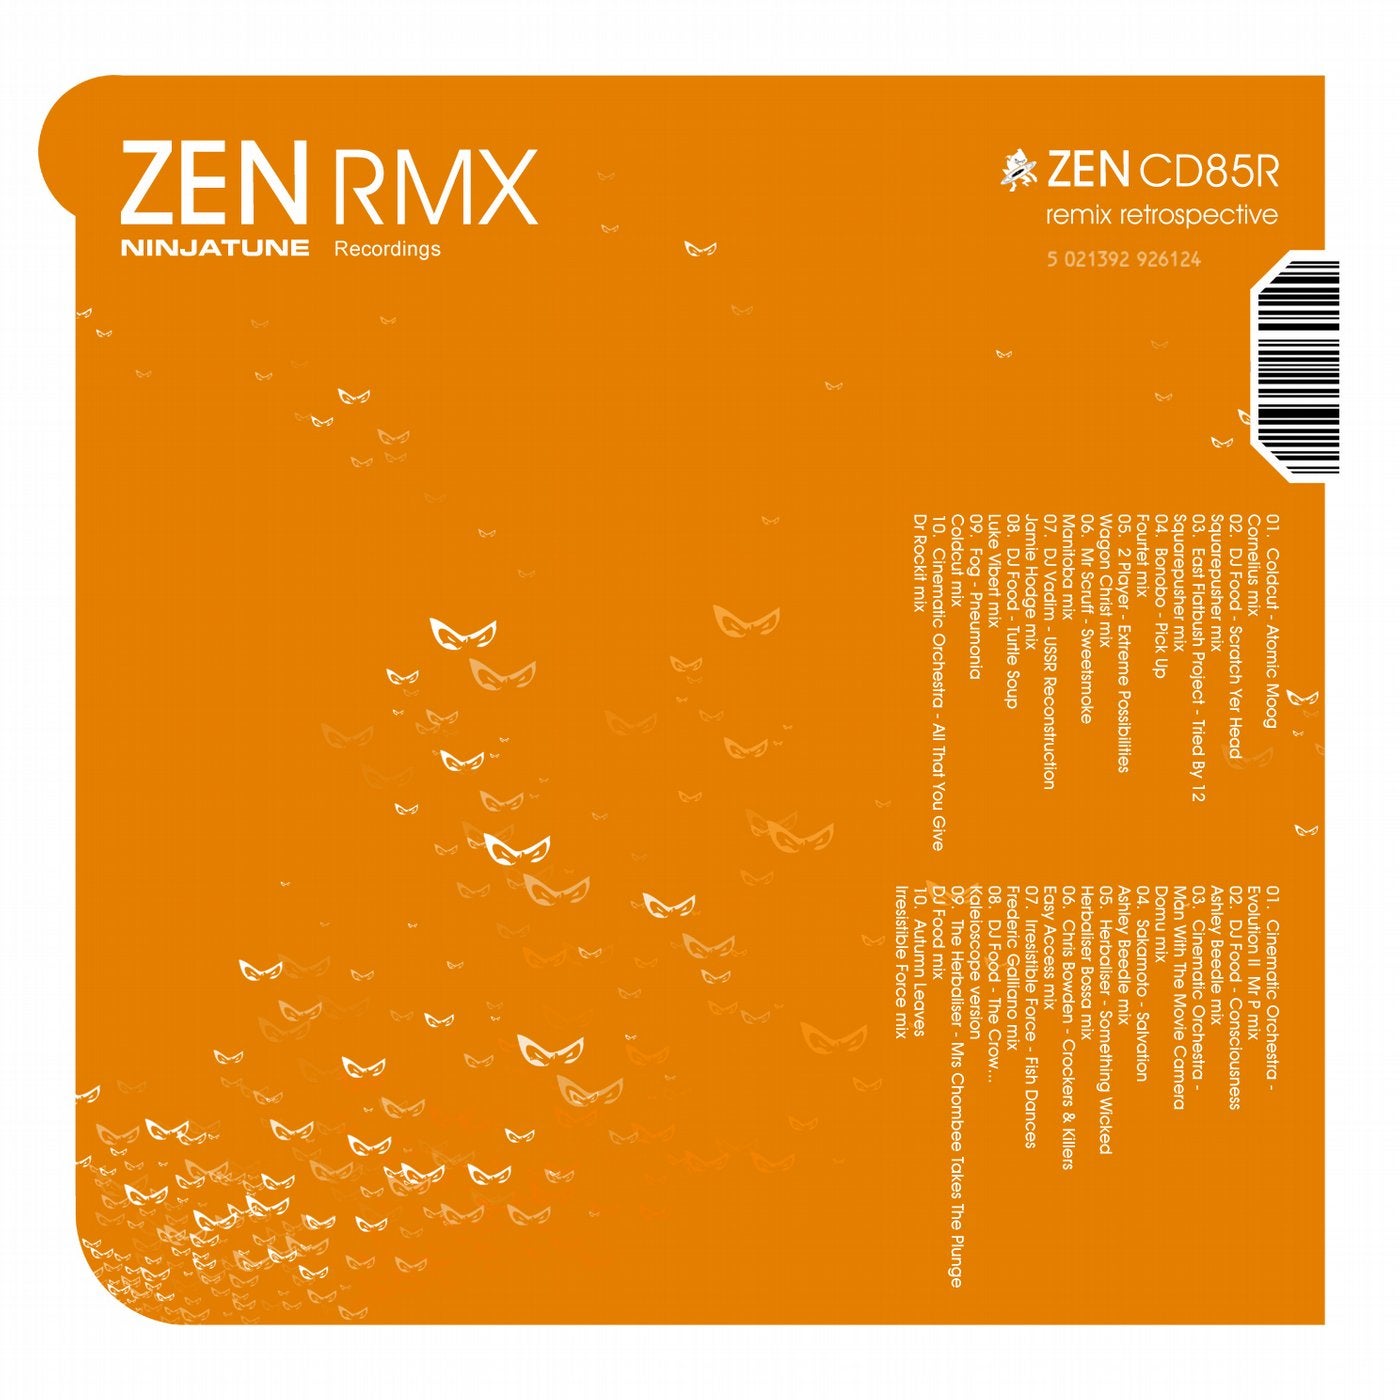 ZEN RMX - A Retrospective of Ninja Tune Remixes